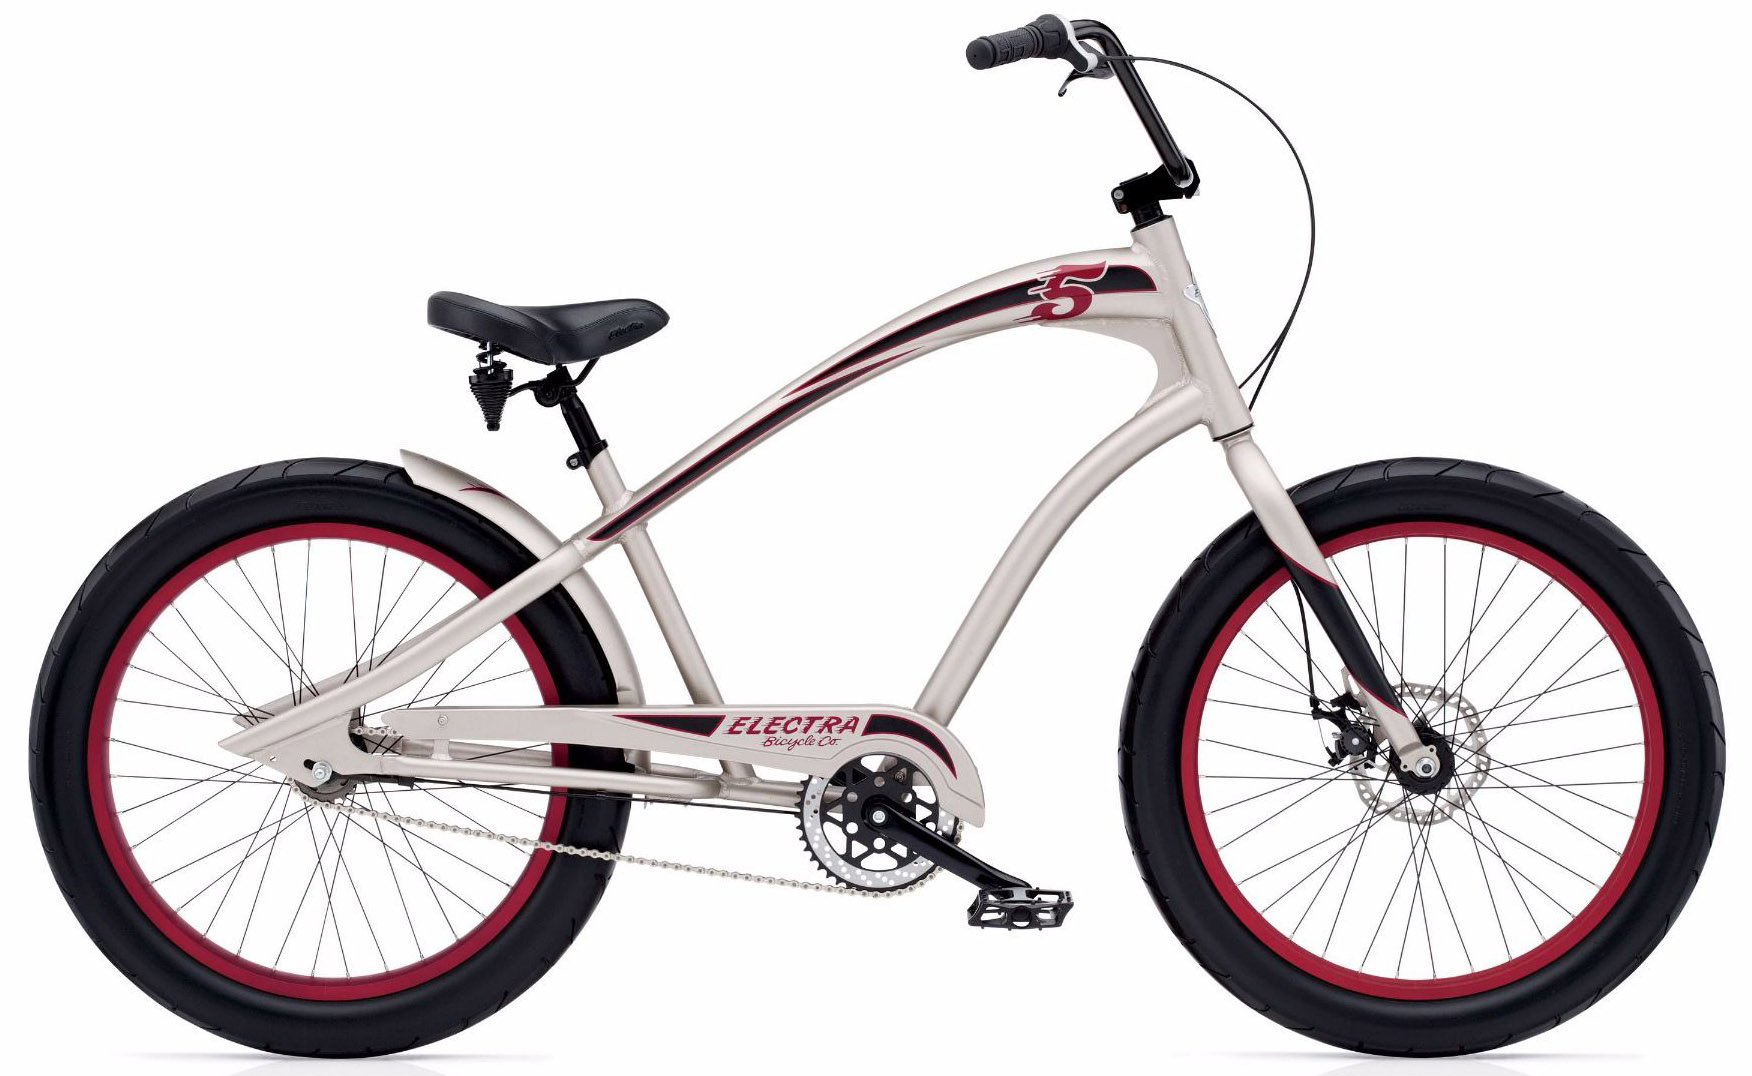  Велосипед Electra Fast 5 3i 2020